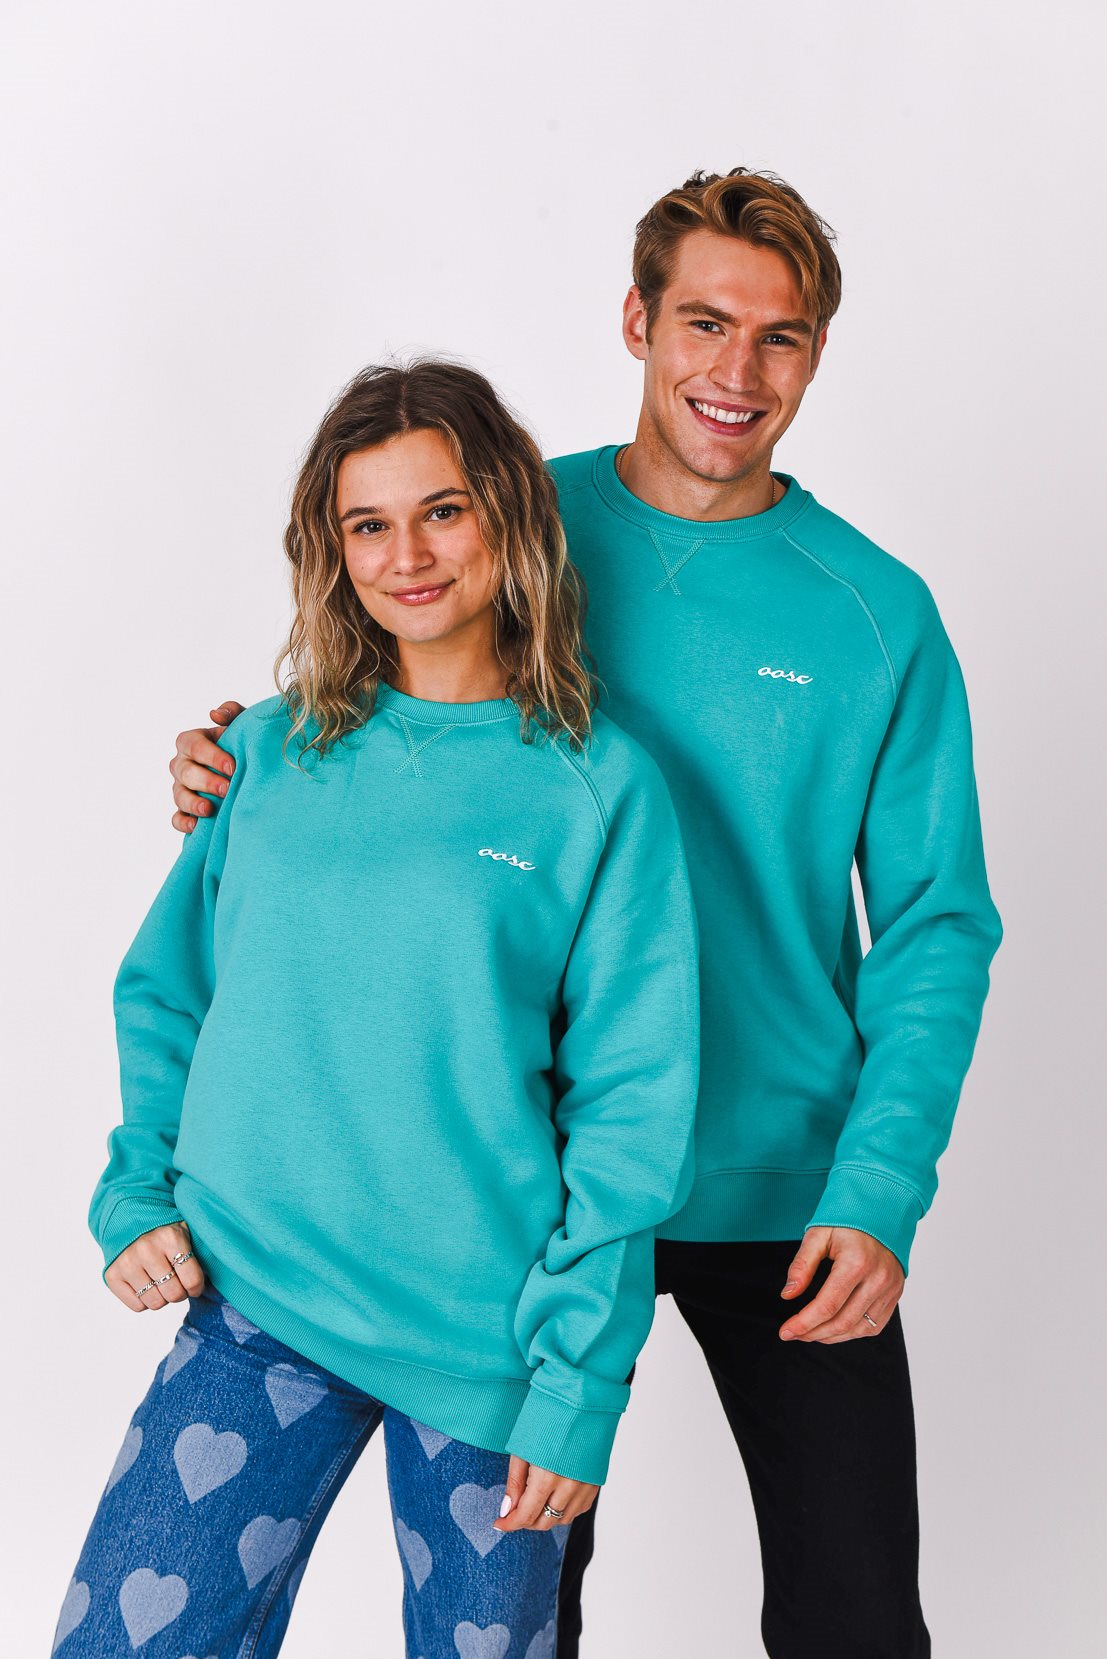 Penfold Sweatshirt - Aqua